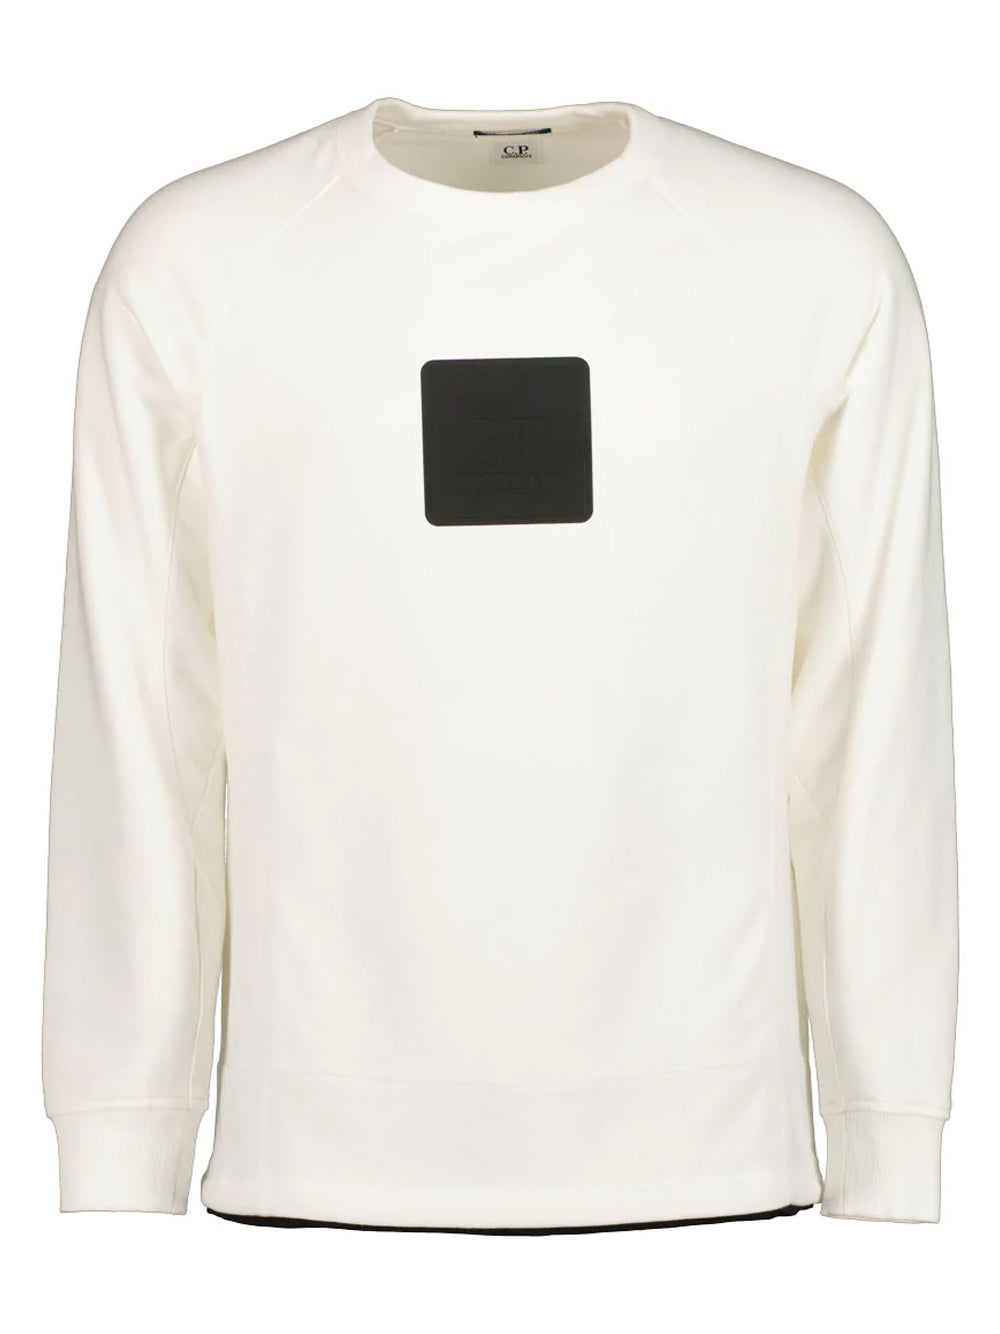 C.P. COMPANY Rubber Logo Sweatshirt White - MAISONDEFASHION.COM